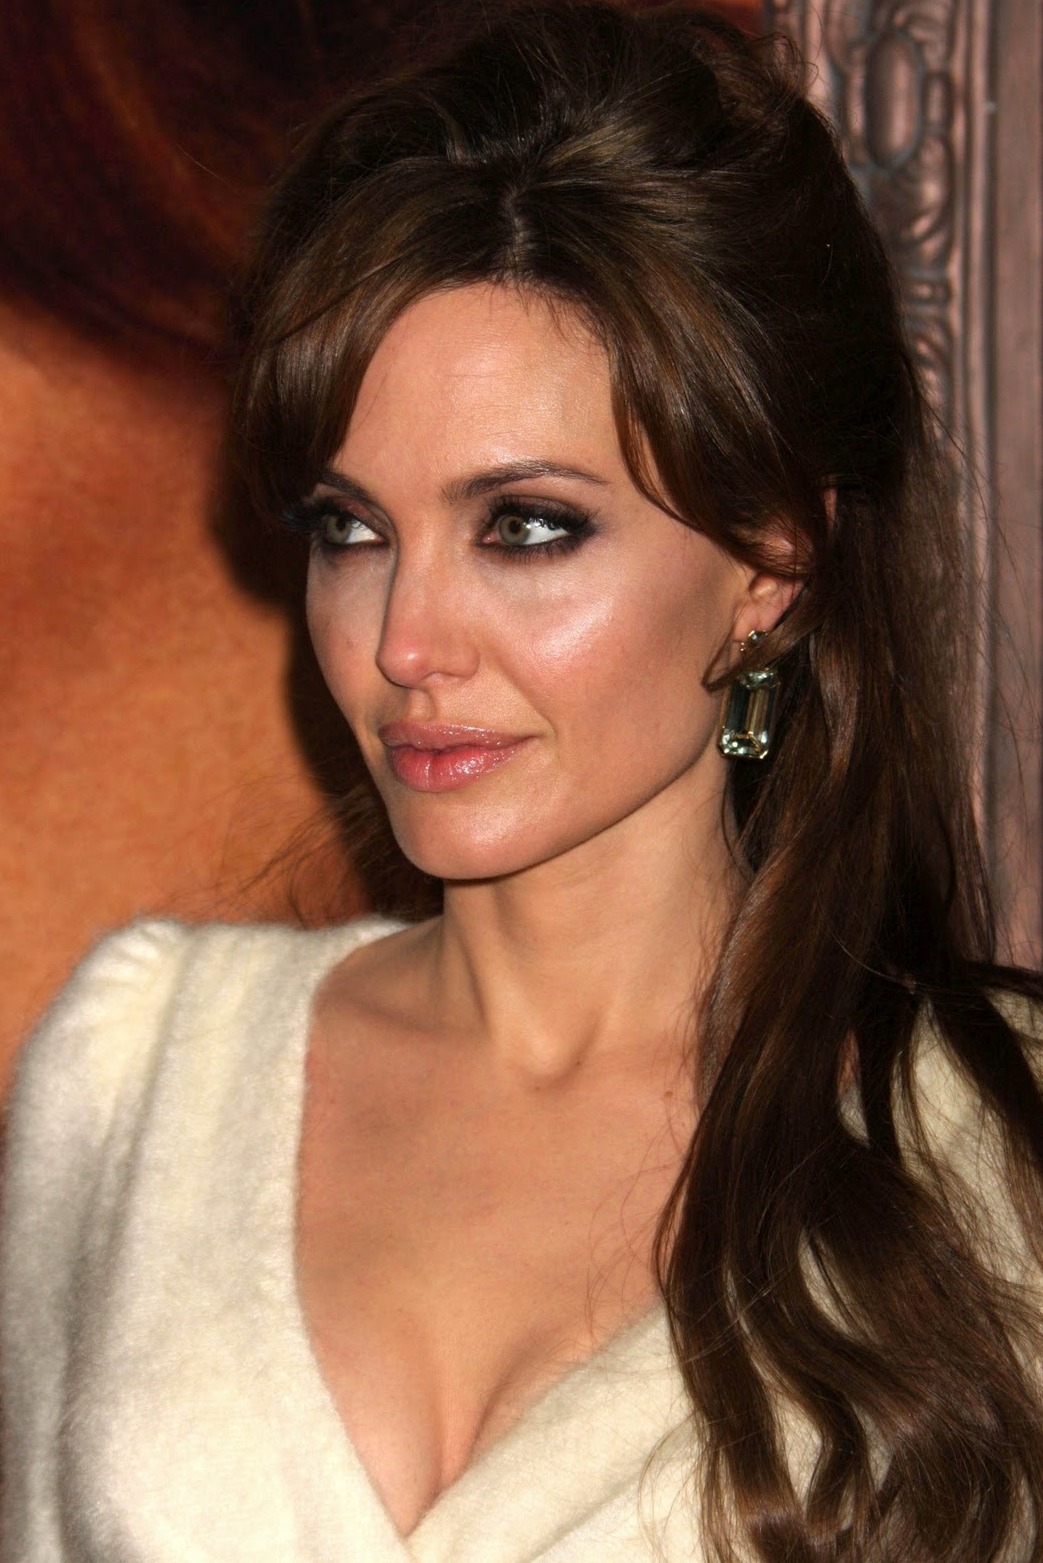 http://2.bp.blogspot.com/_LVSBSw6oemI/TTqEib24X-I/AAAAAAAAD2c/7Wch9B1XpeA/s1600/Angelina_Jolie_Latest_Cool_00.jpg